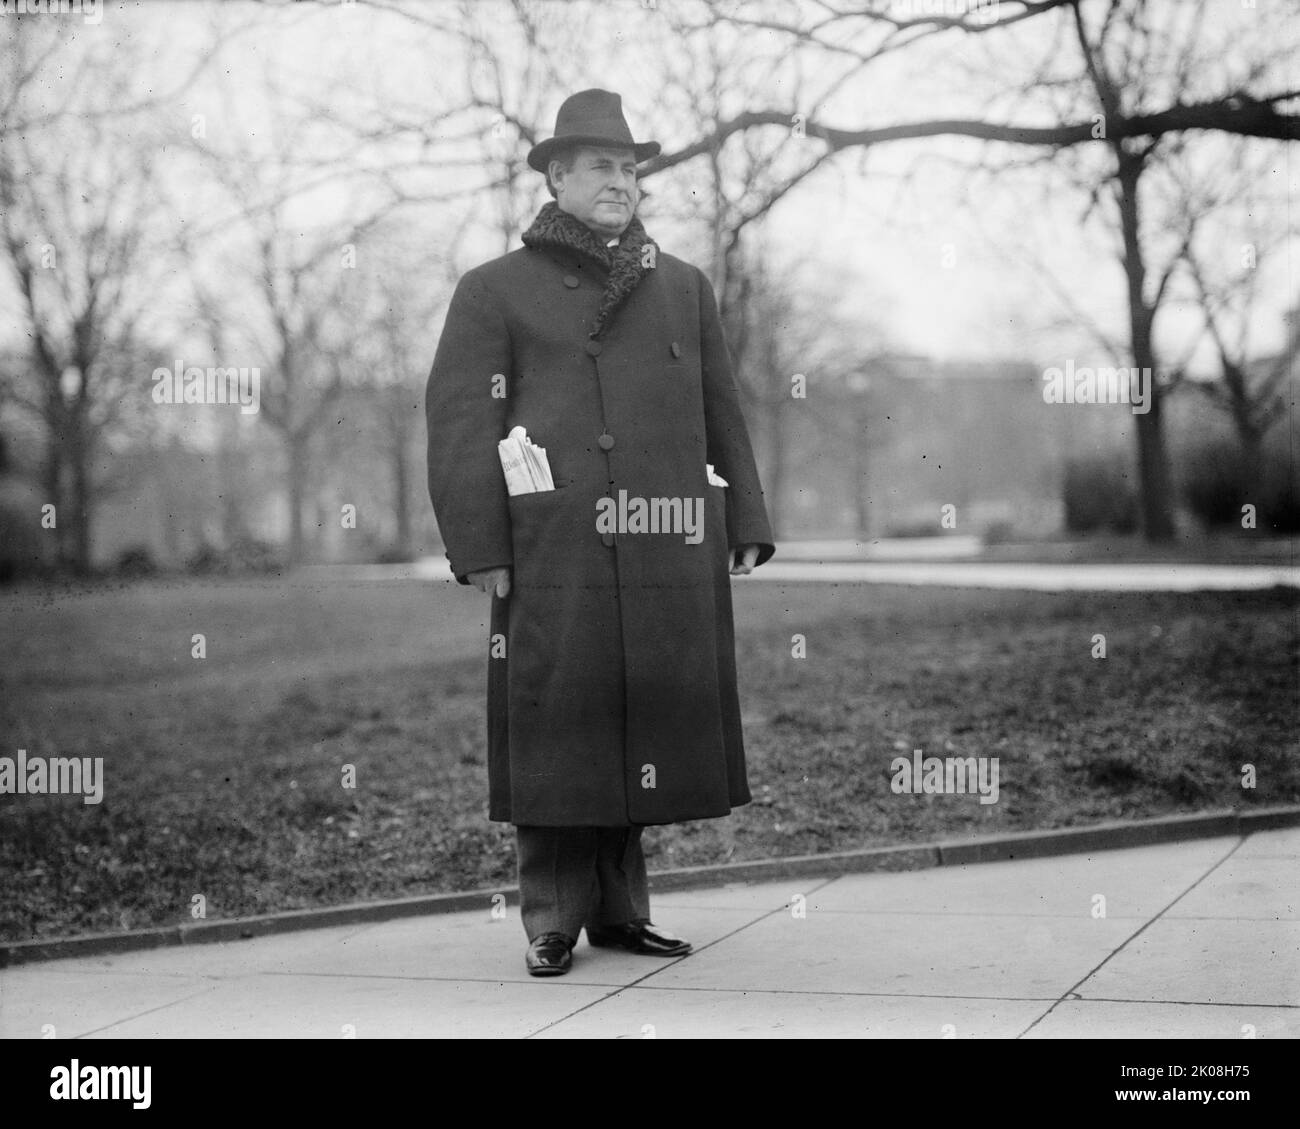 William Jennings Bryan, Rep. from Nebraska, 1911. [US politician and lawyer, Representative 1891-1895; Secretary of State, 1913-1915]. Stock Photo